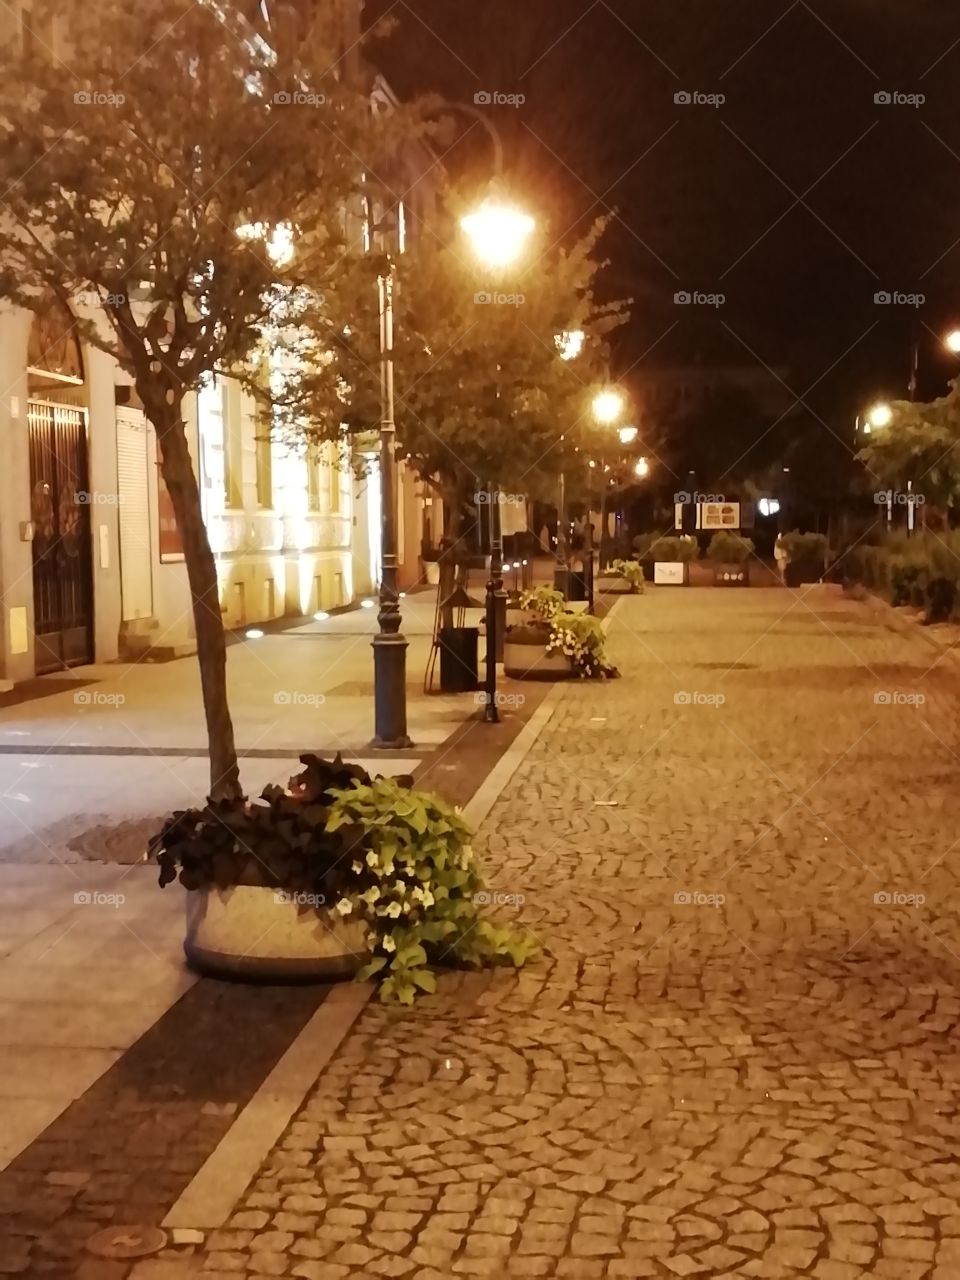 Evening streets of Nowa Sól.  Central street in Nowa Sól.
Вечерние улици города Nowa Sól. Центральная улица в Nowa Sól.